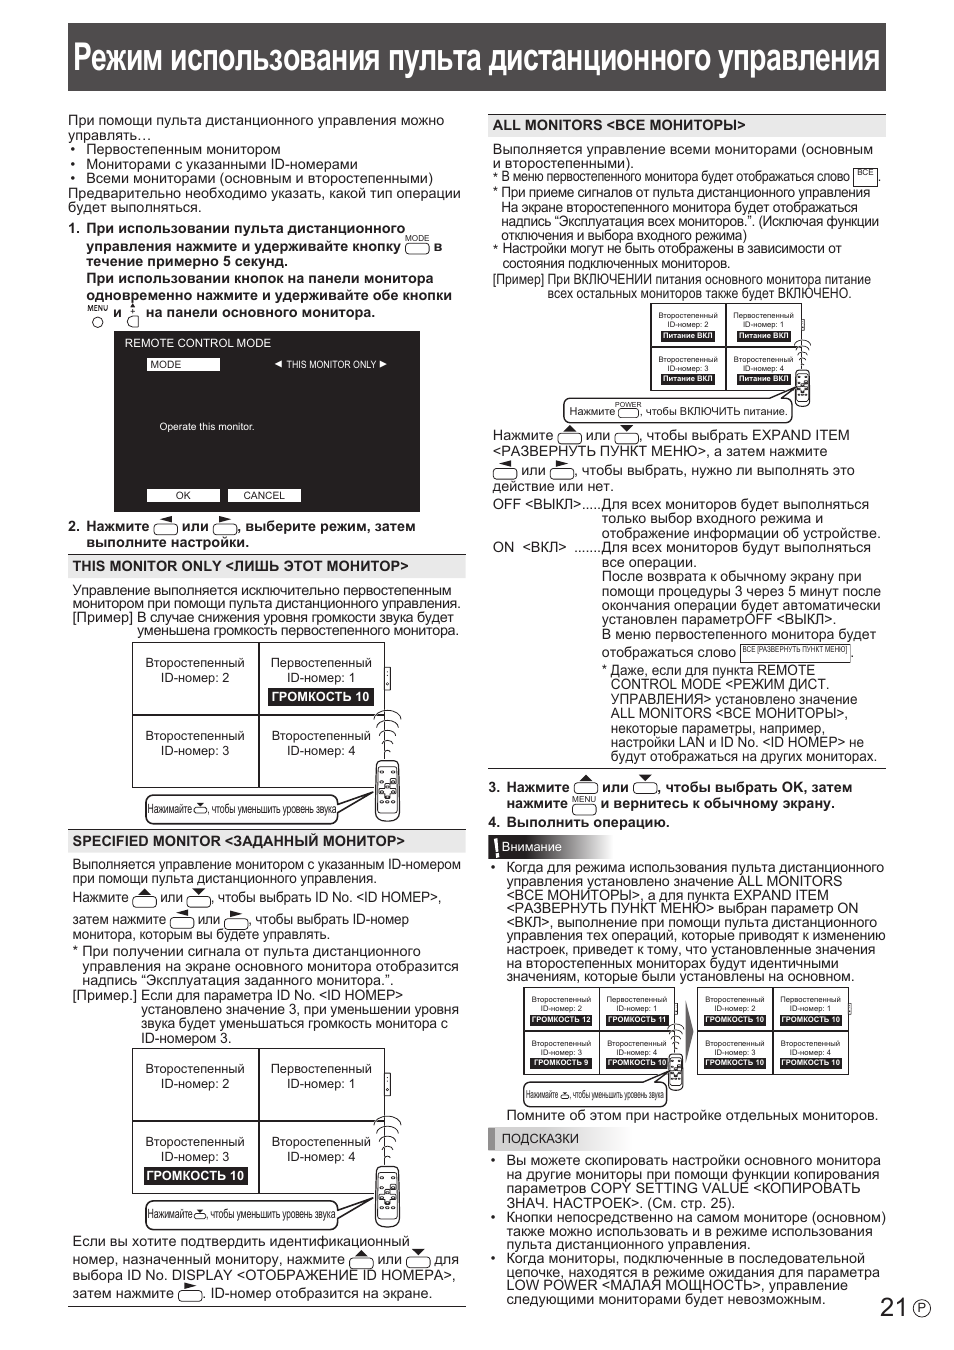 Инструкция по эксплуатации Sharp PN-V602 | Страница 21 / 60